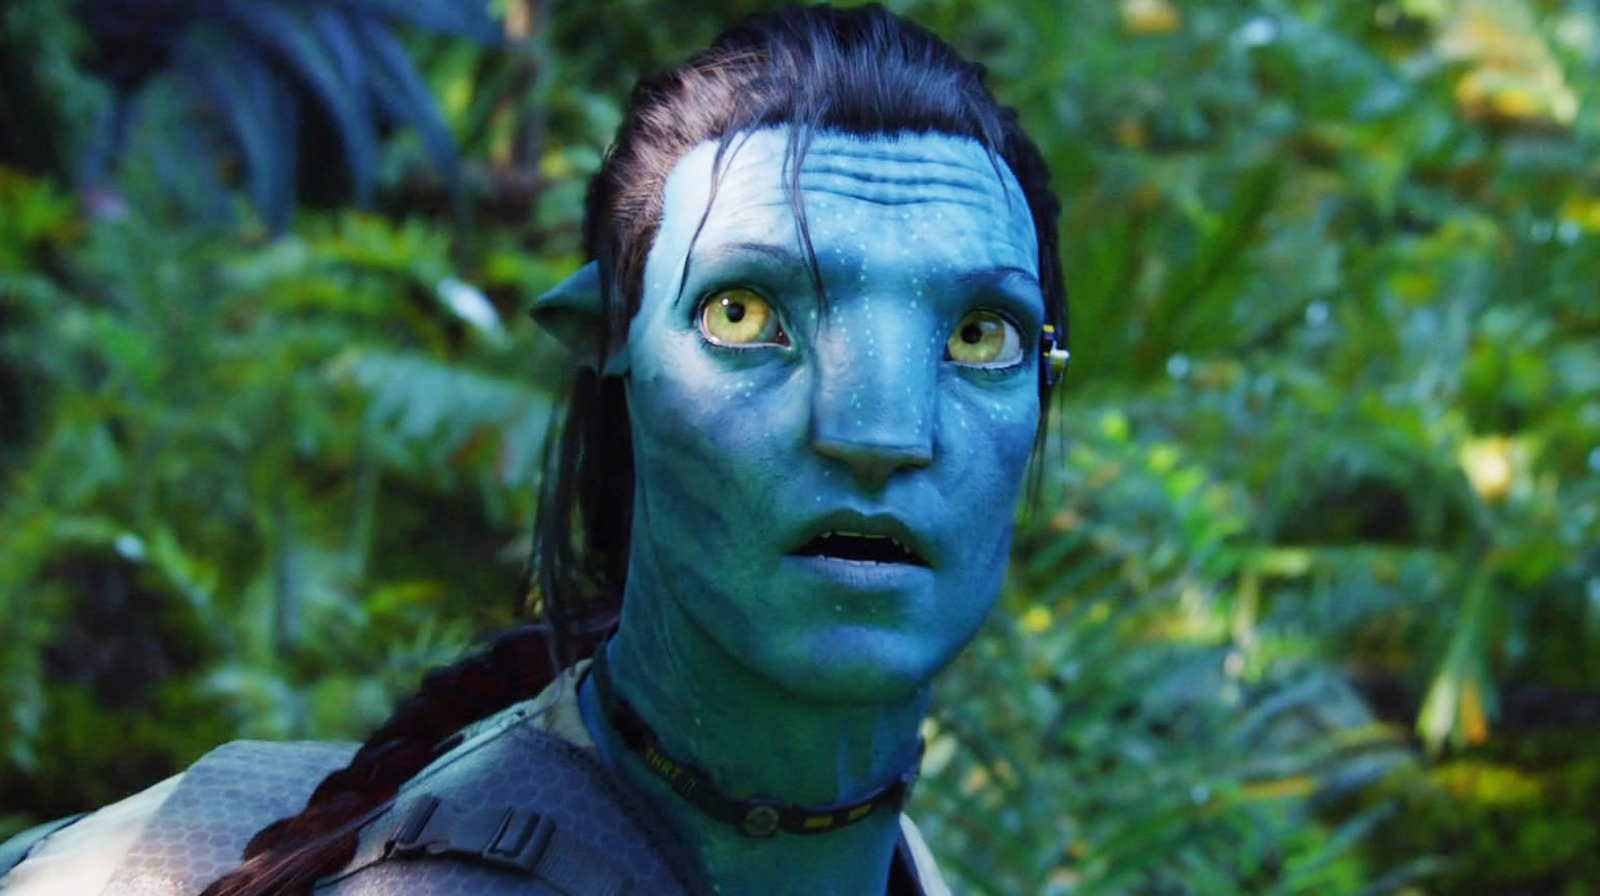 Actress Zoe Saldana welcomes Avatar sequel filming announcement